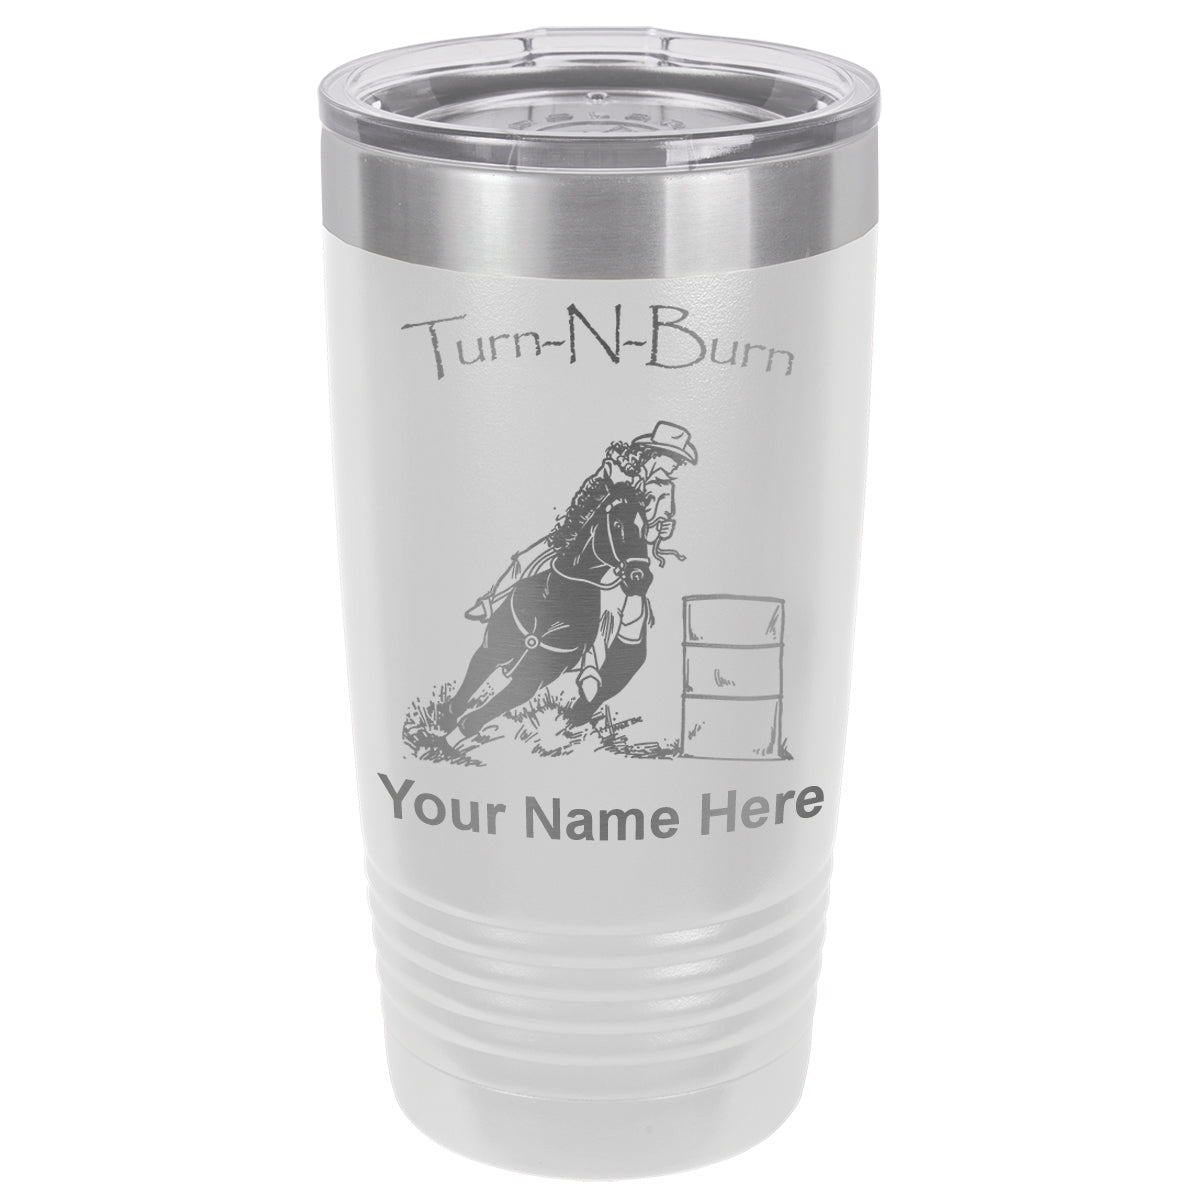 20oz Vacuum Insulated Tumbler Mug, Barrel Racer Turn N Burn, Personalized Engraving Included